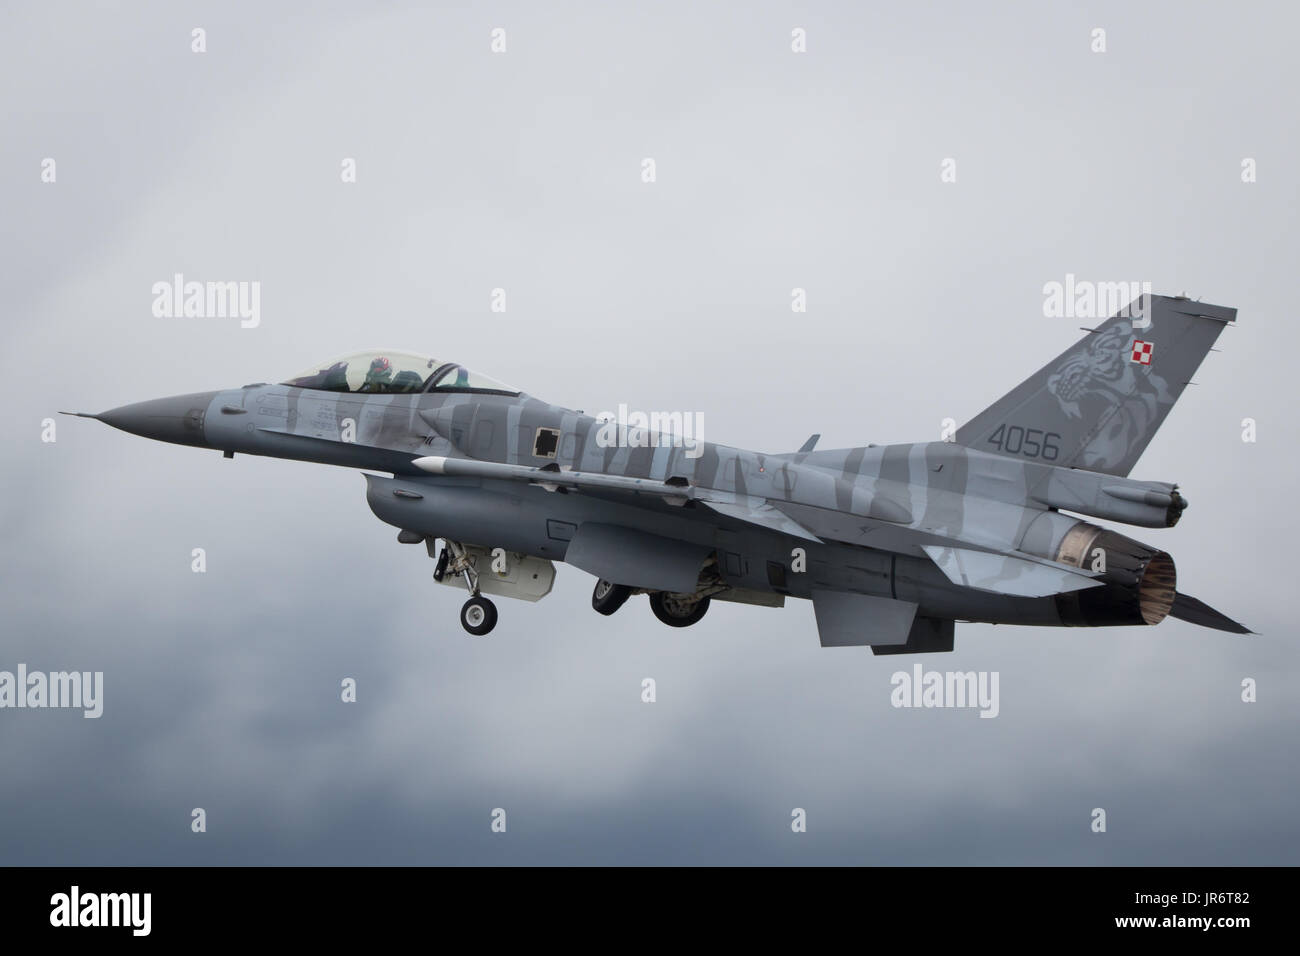 Fairford, Gloucestershire, UK - 10. Juli 2016: Lockheed Martin, General Dynamics F-16 Fighting Falcon anzeigen Stockfoto